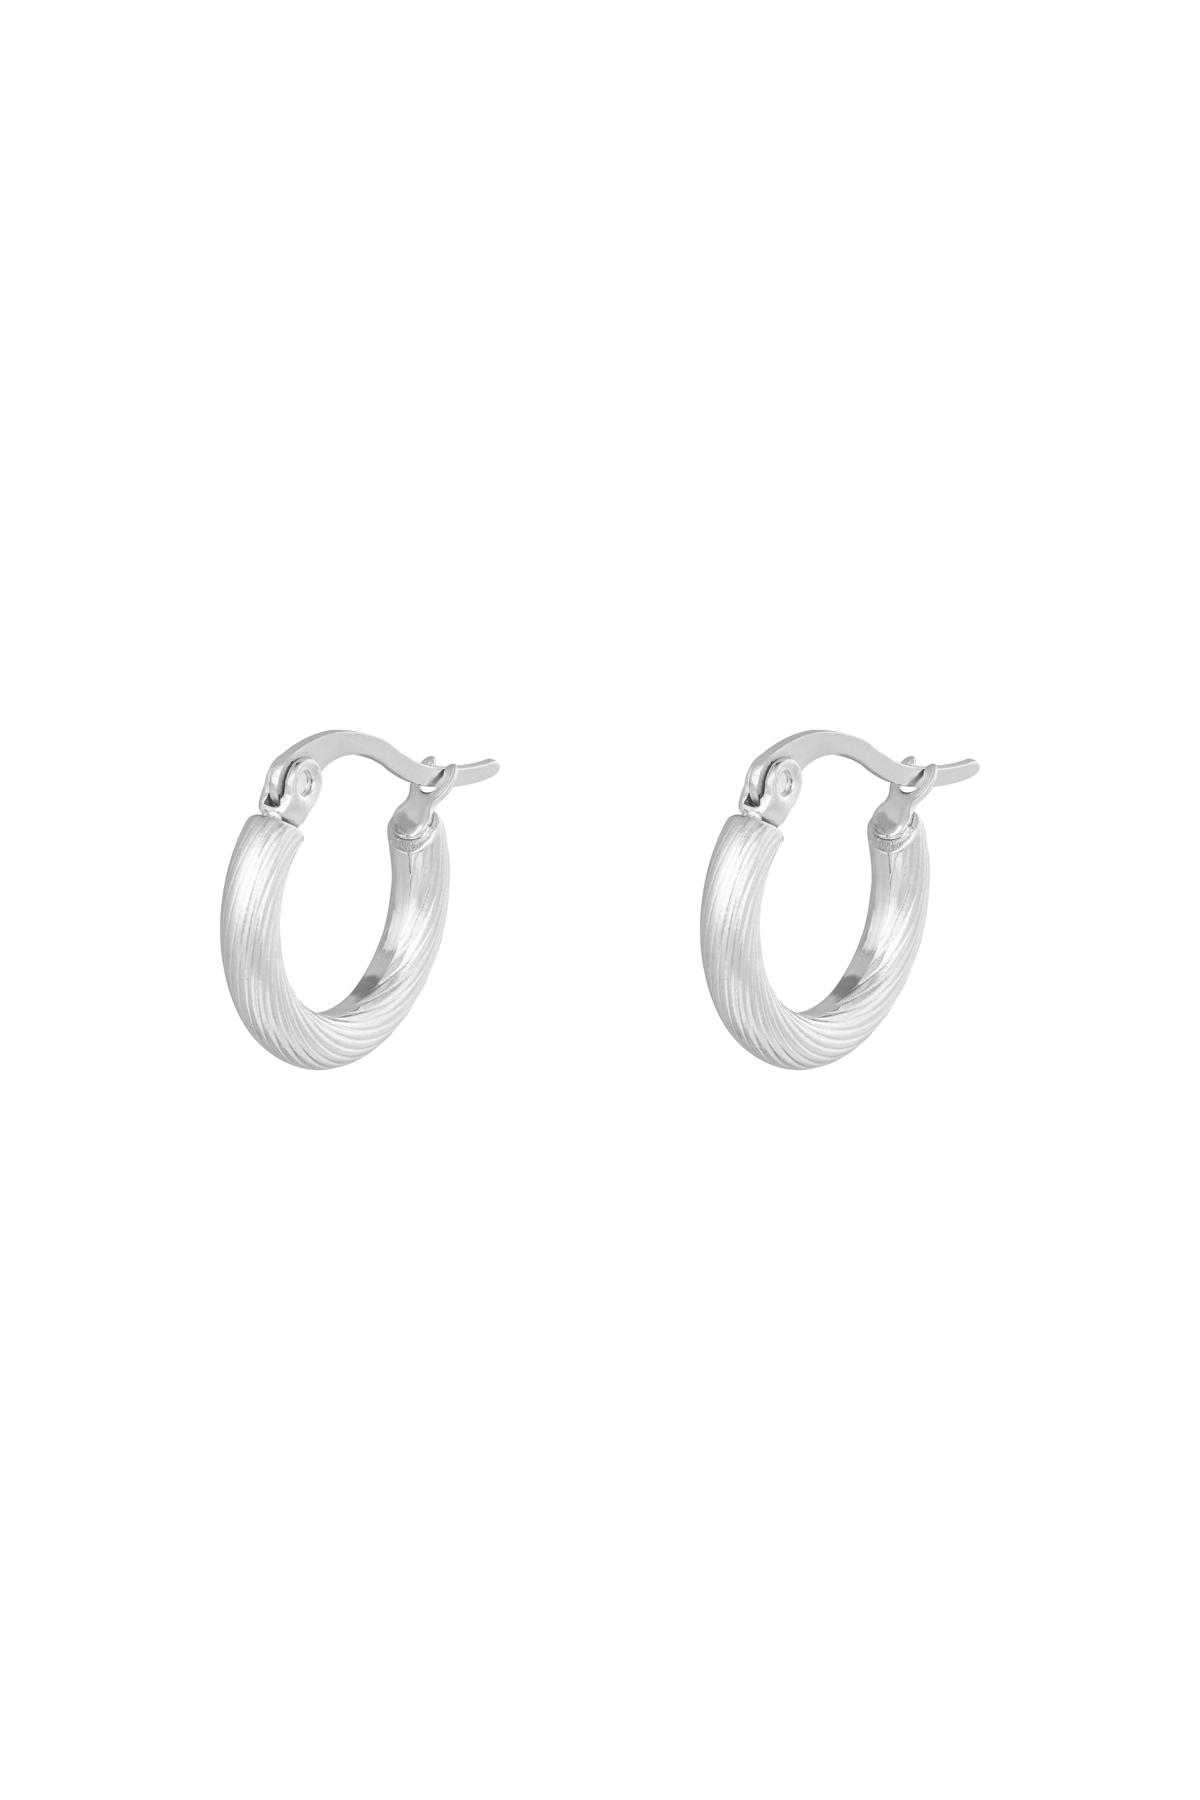 Earrings Hoops Twisted 15 mm Silver Stainless Steel